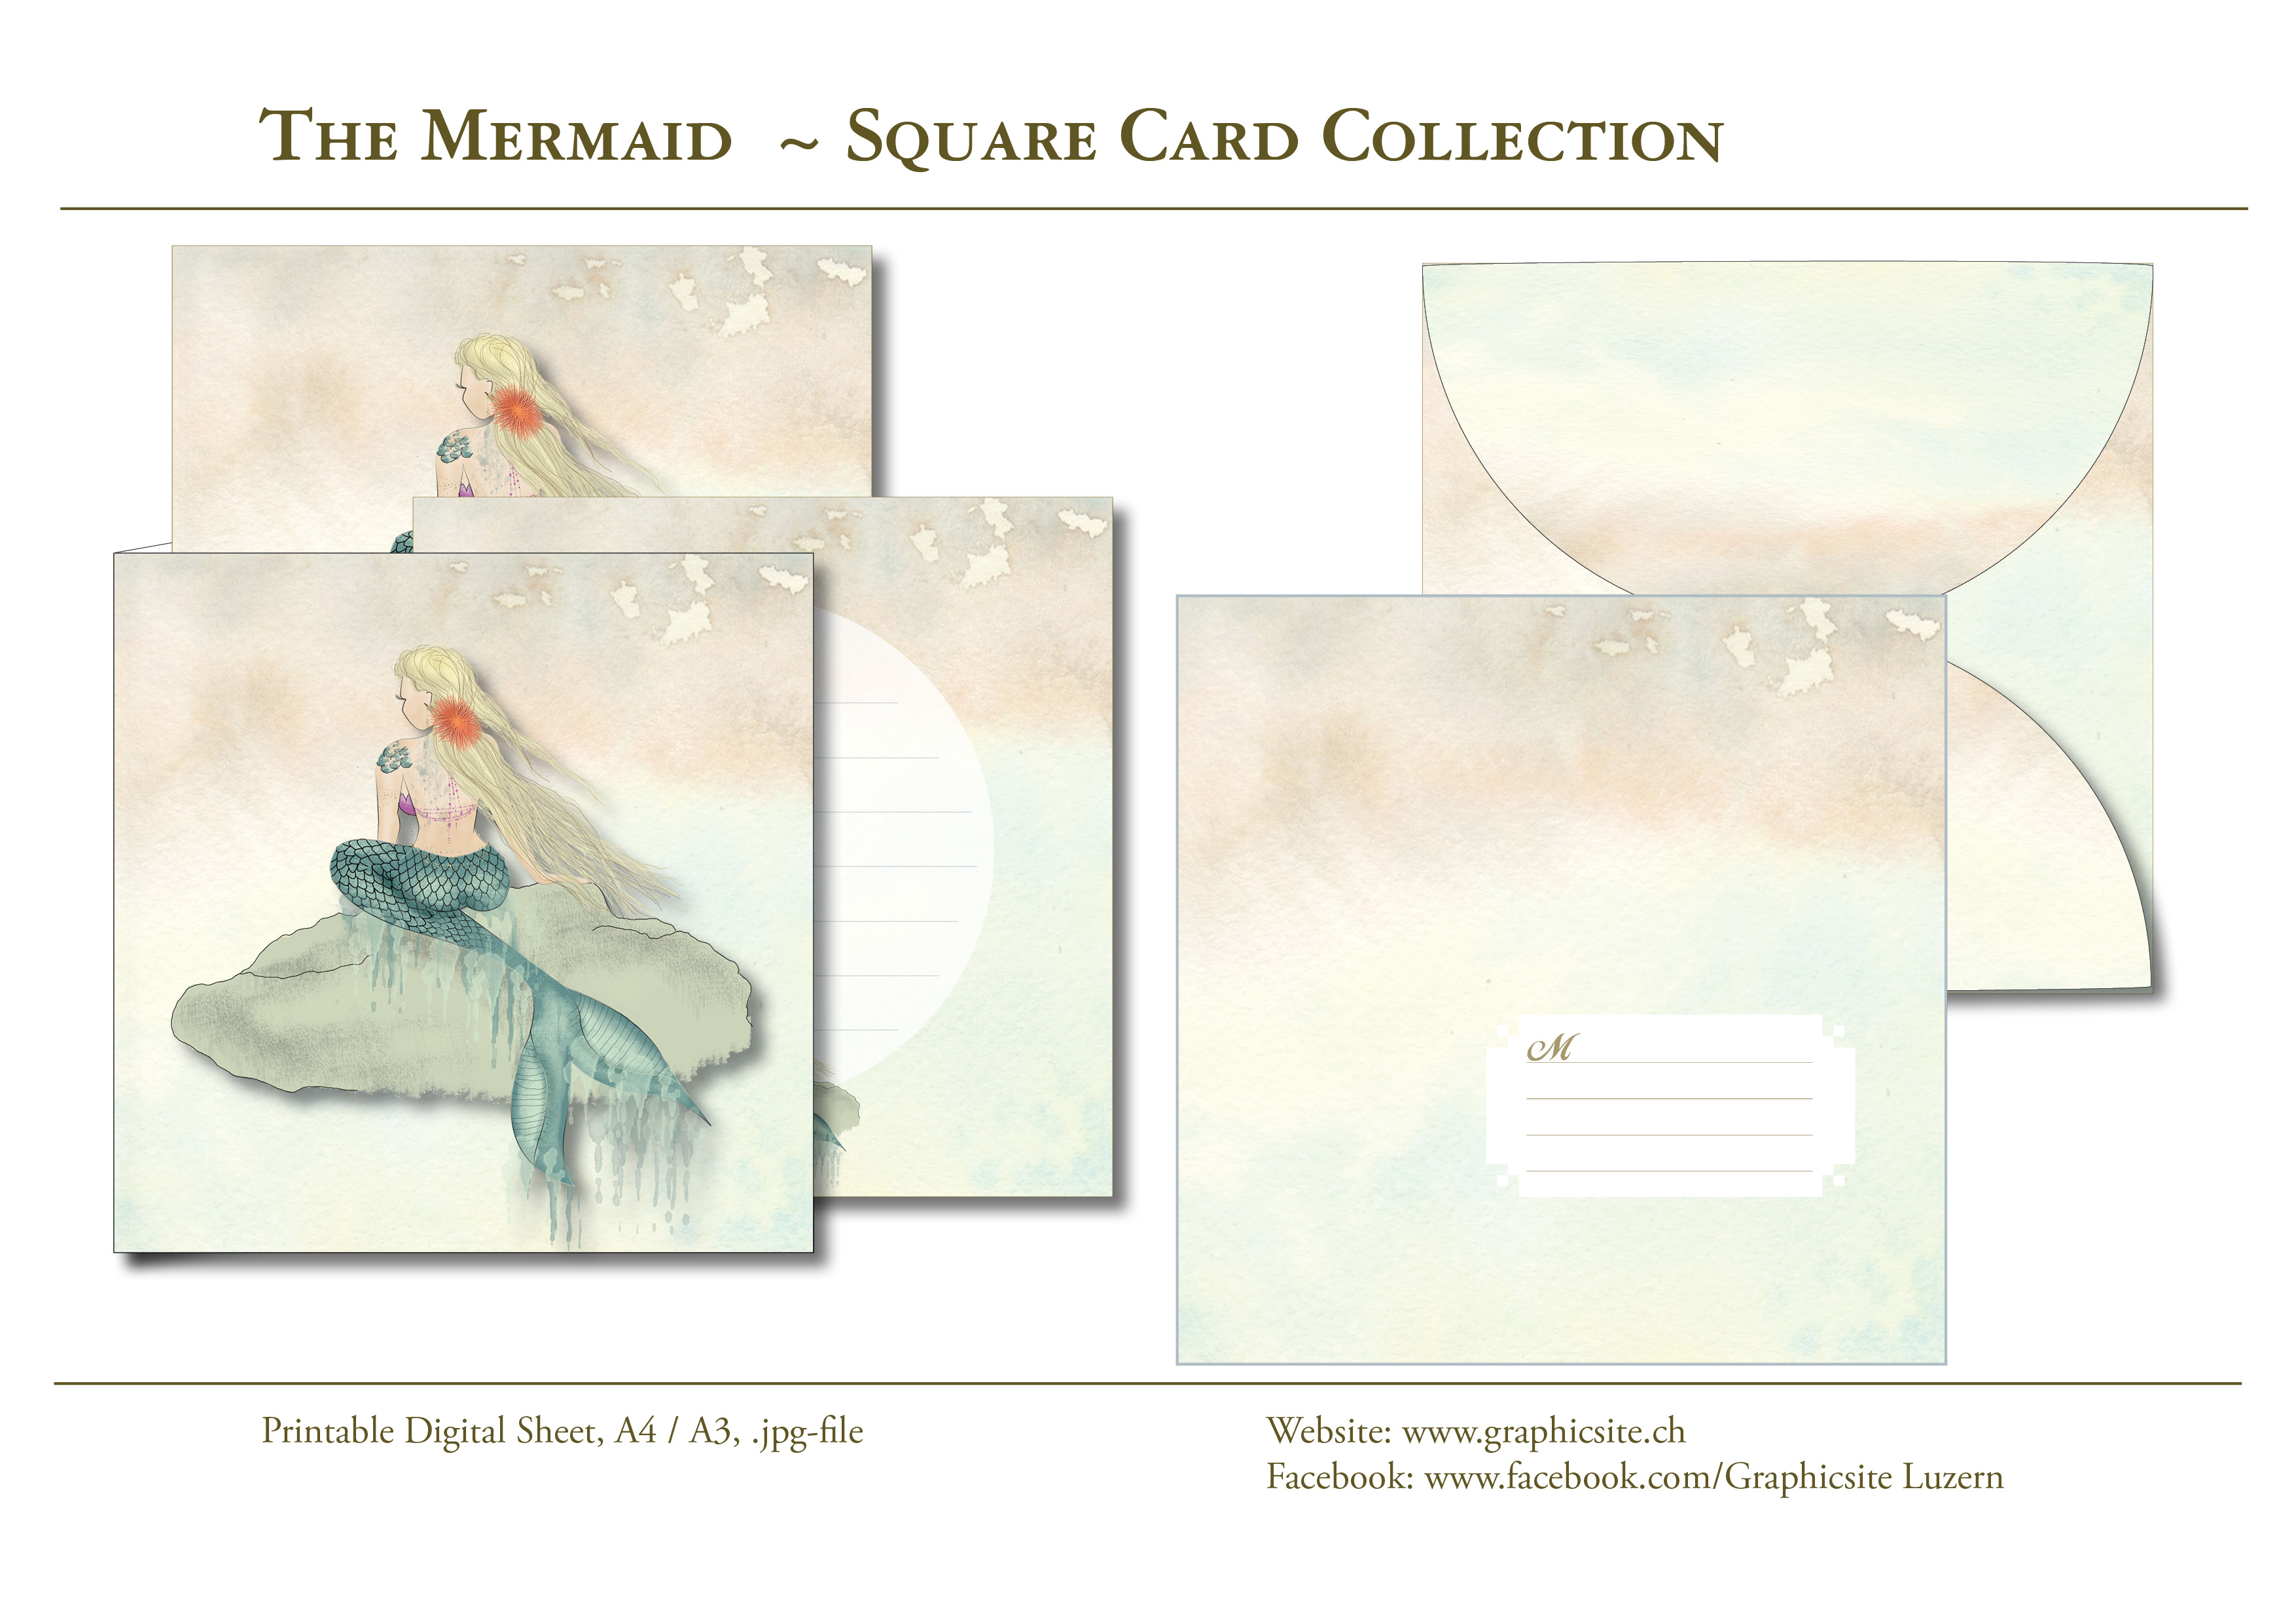 Printable Digital Sheets - Square Card Collection, Mermaid, Sea, Ocean, Greeting Cards, Envelope, Notecard, Graphic Design, Digital Art,